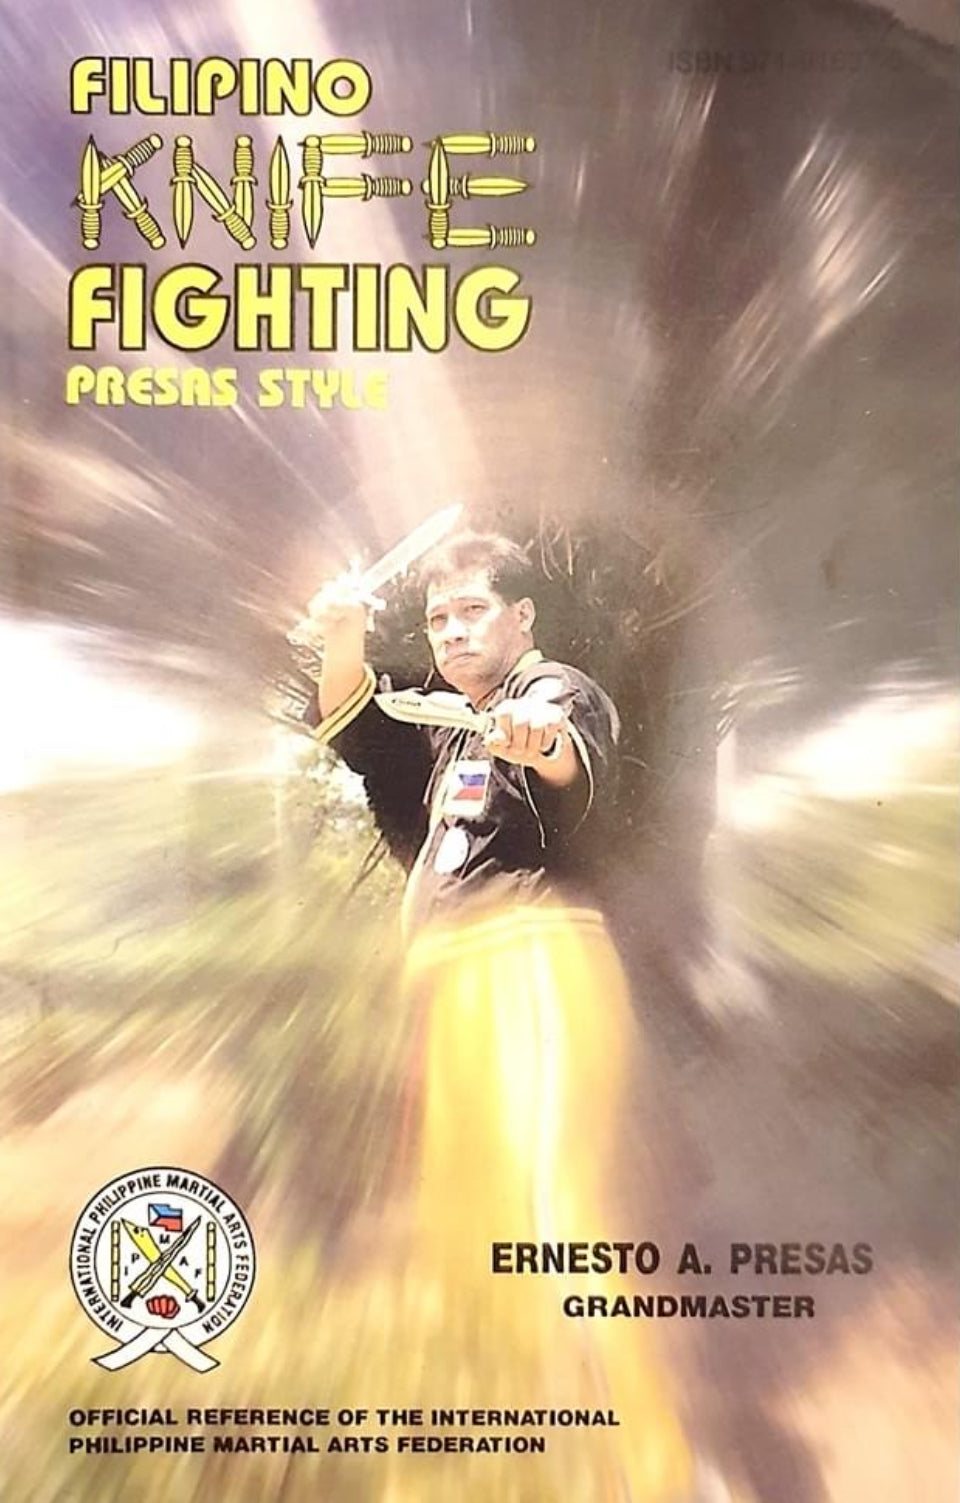 Filipino Knife Fighting Presas Style Book by Ernesto Presas (Preowned)